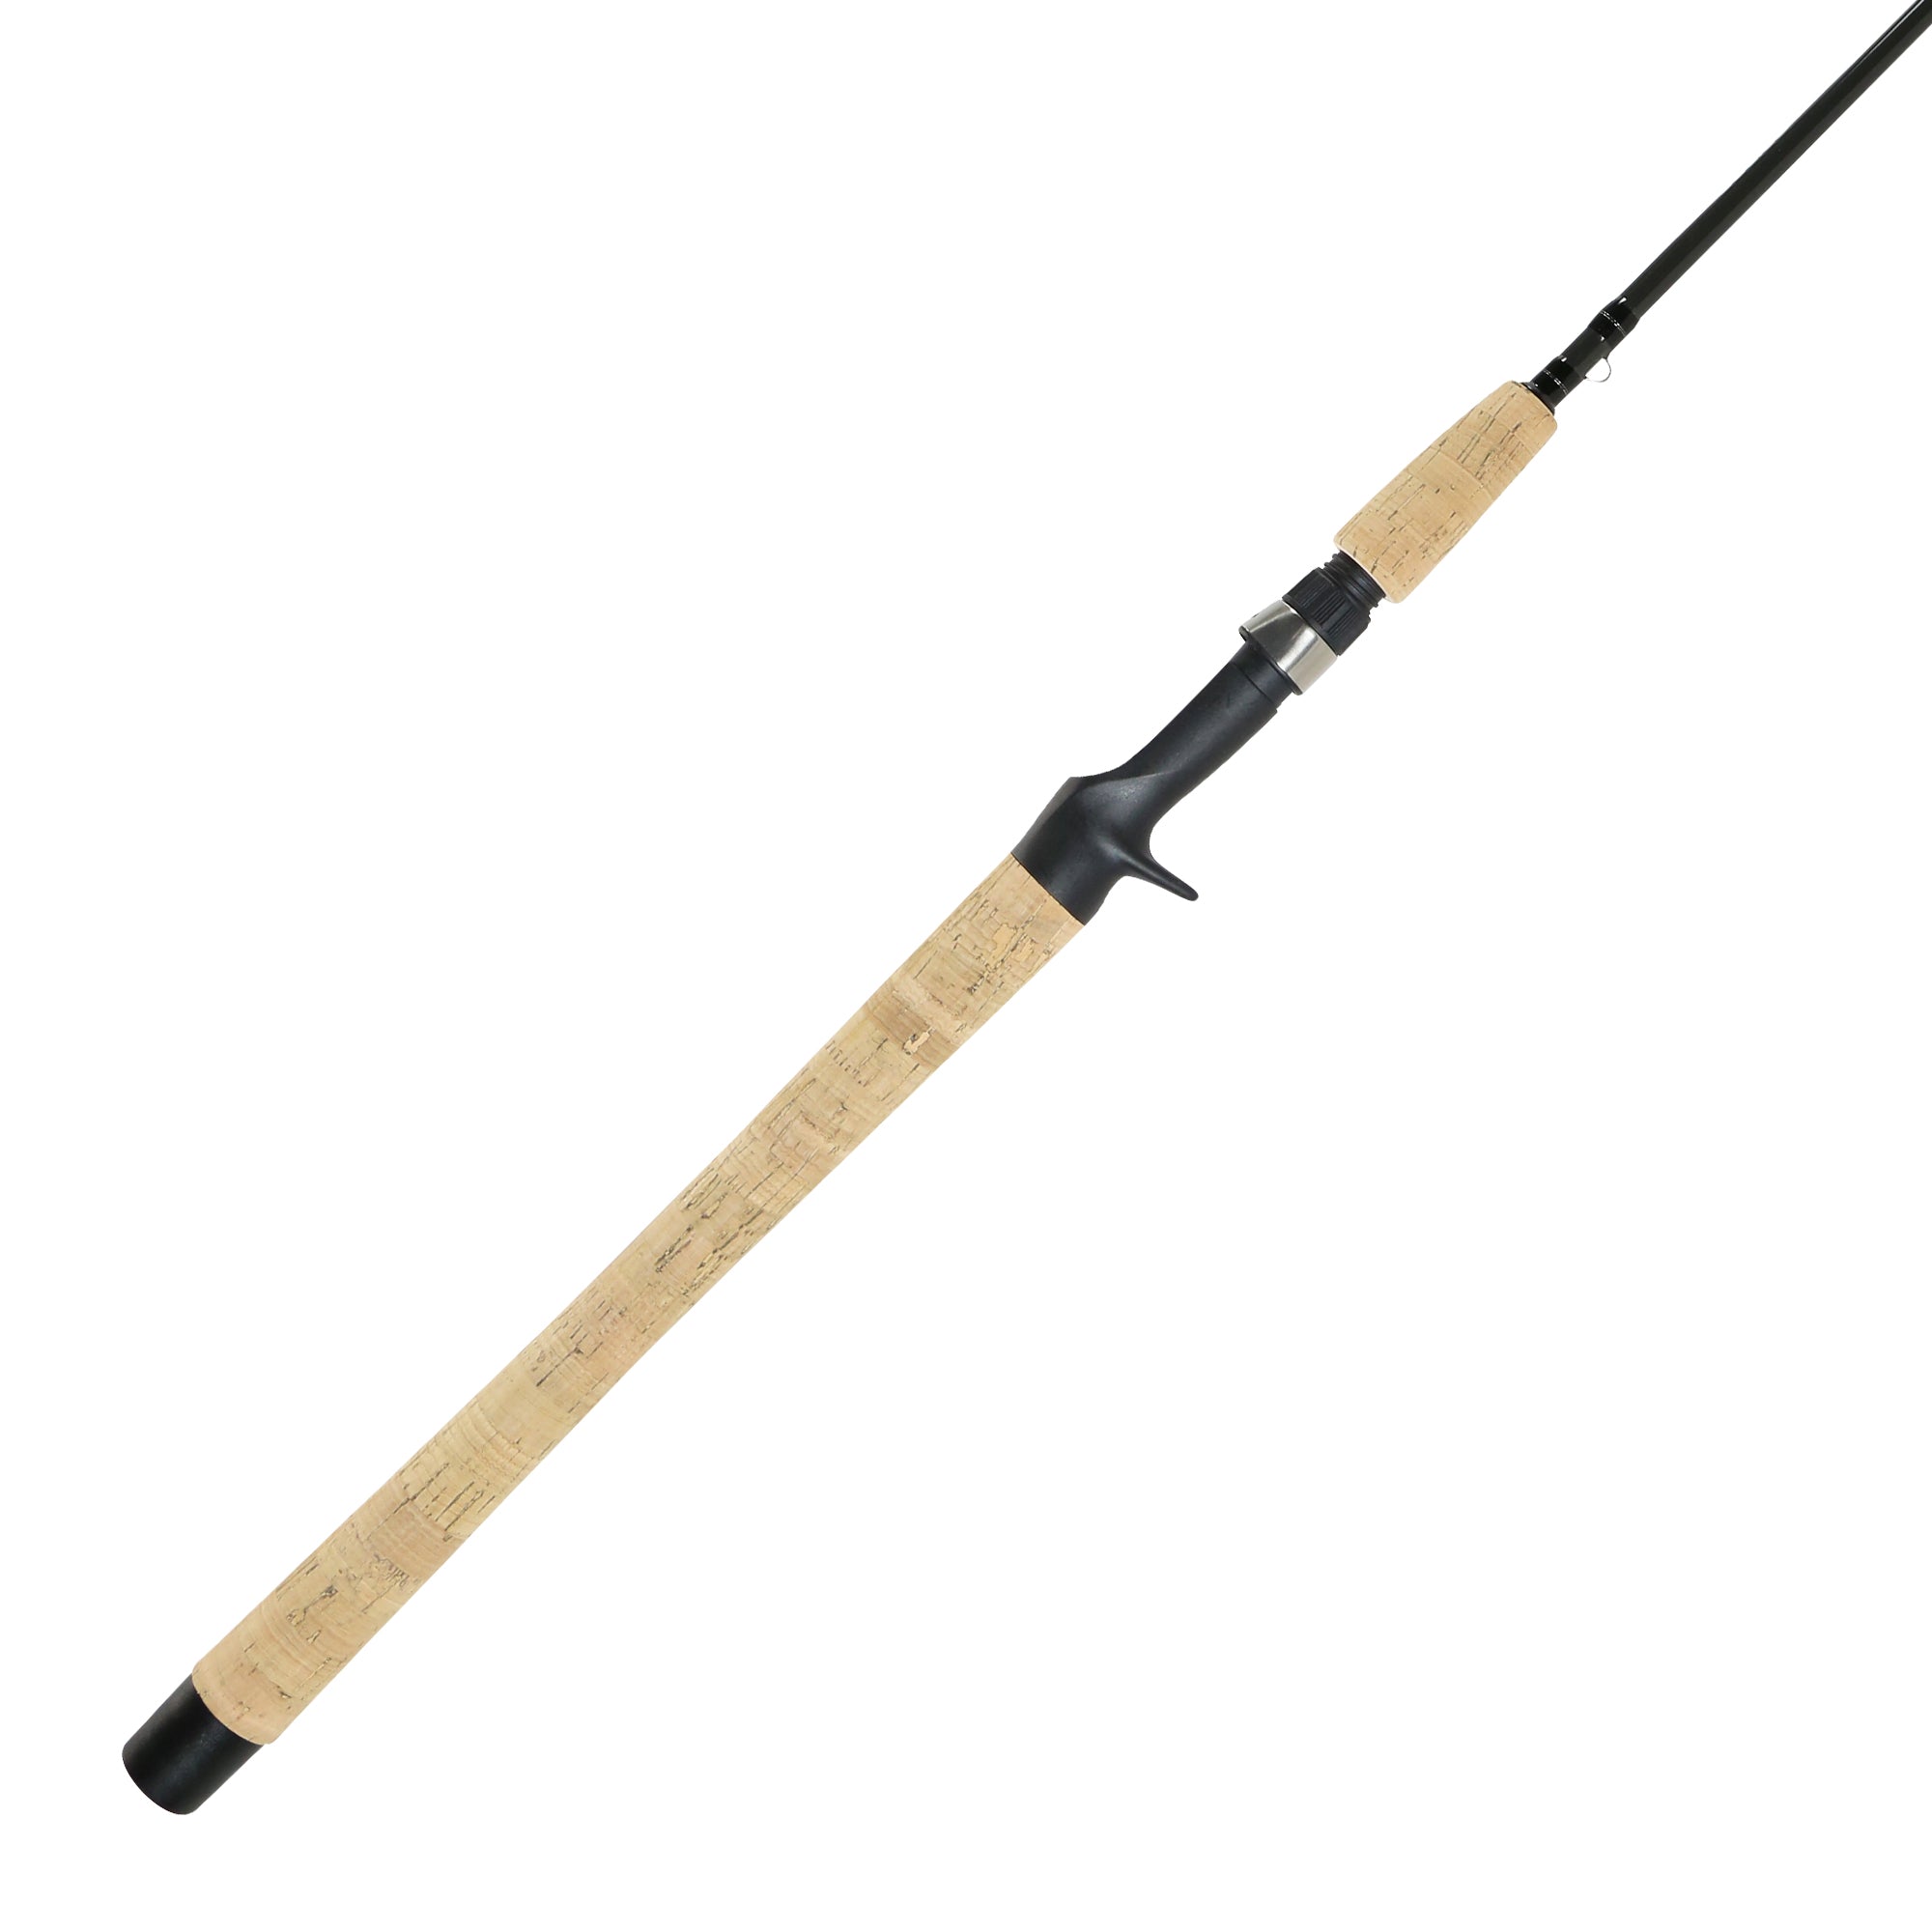 Fishing With The OKUMA CELILO Ultralight Rod! [First Impressions